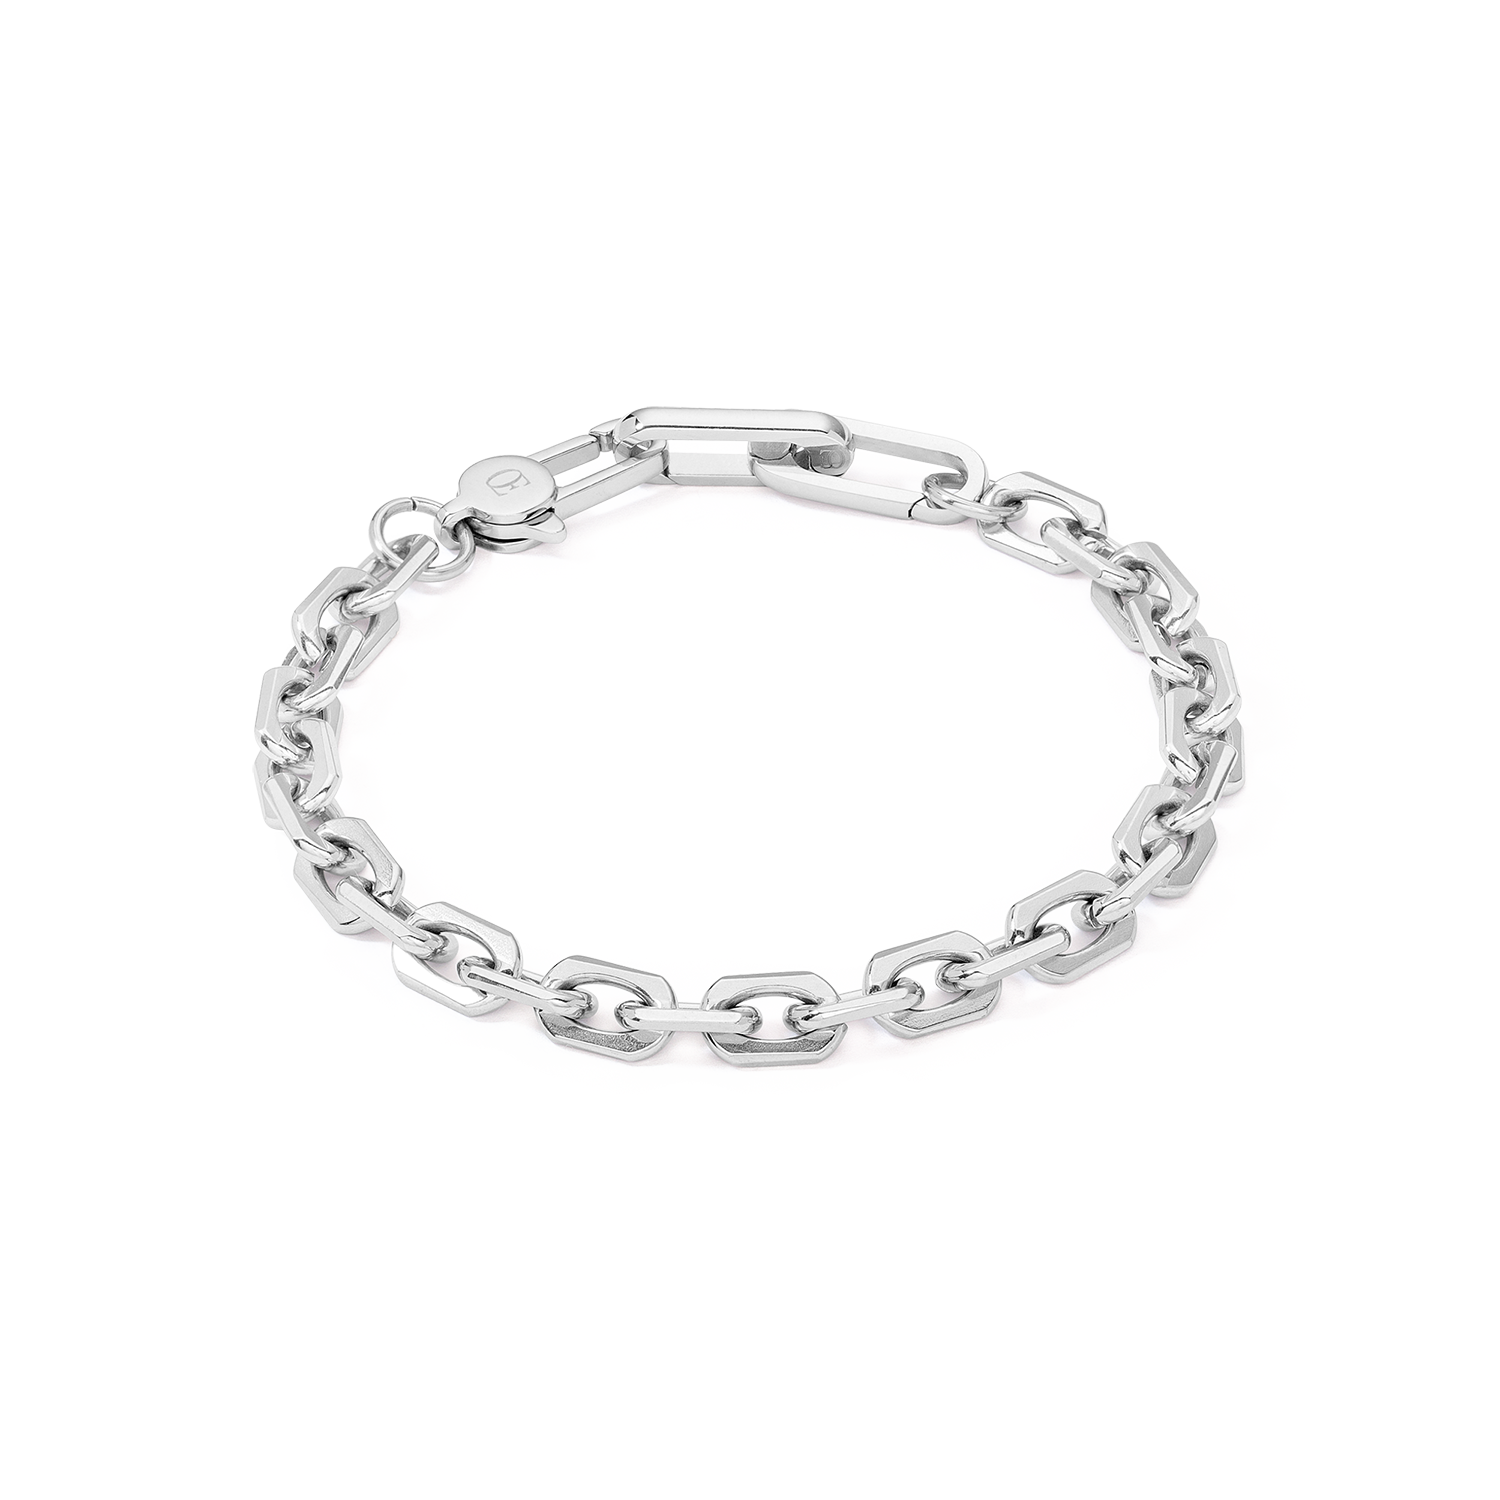 Unisex bracelet link chain silver